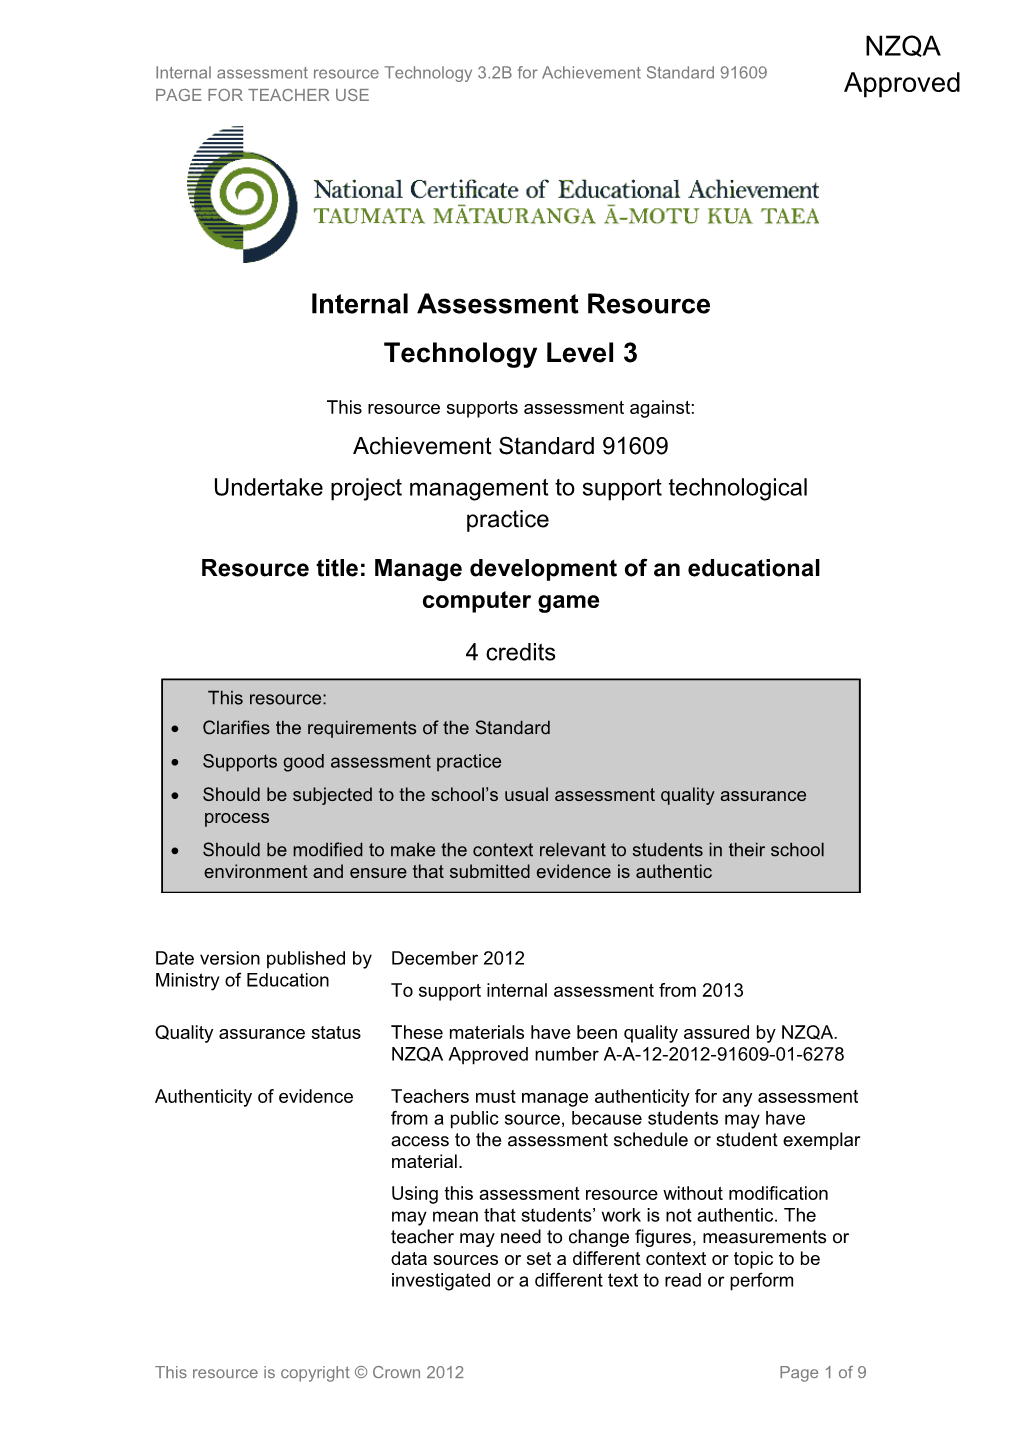 Level 3 Technology Internal Assessment Resources